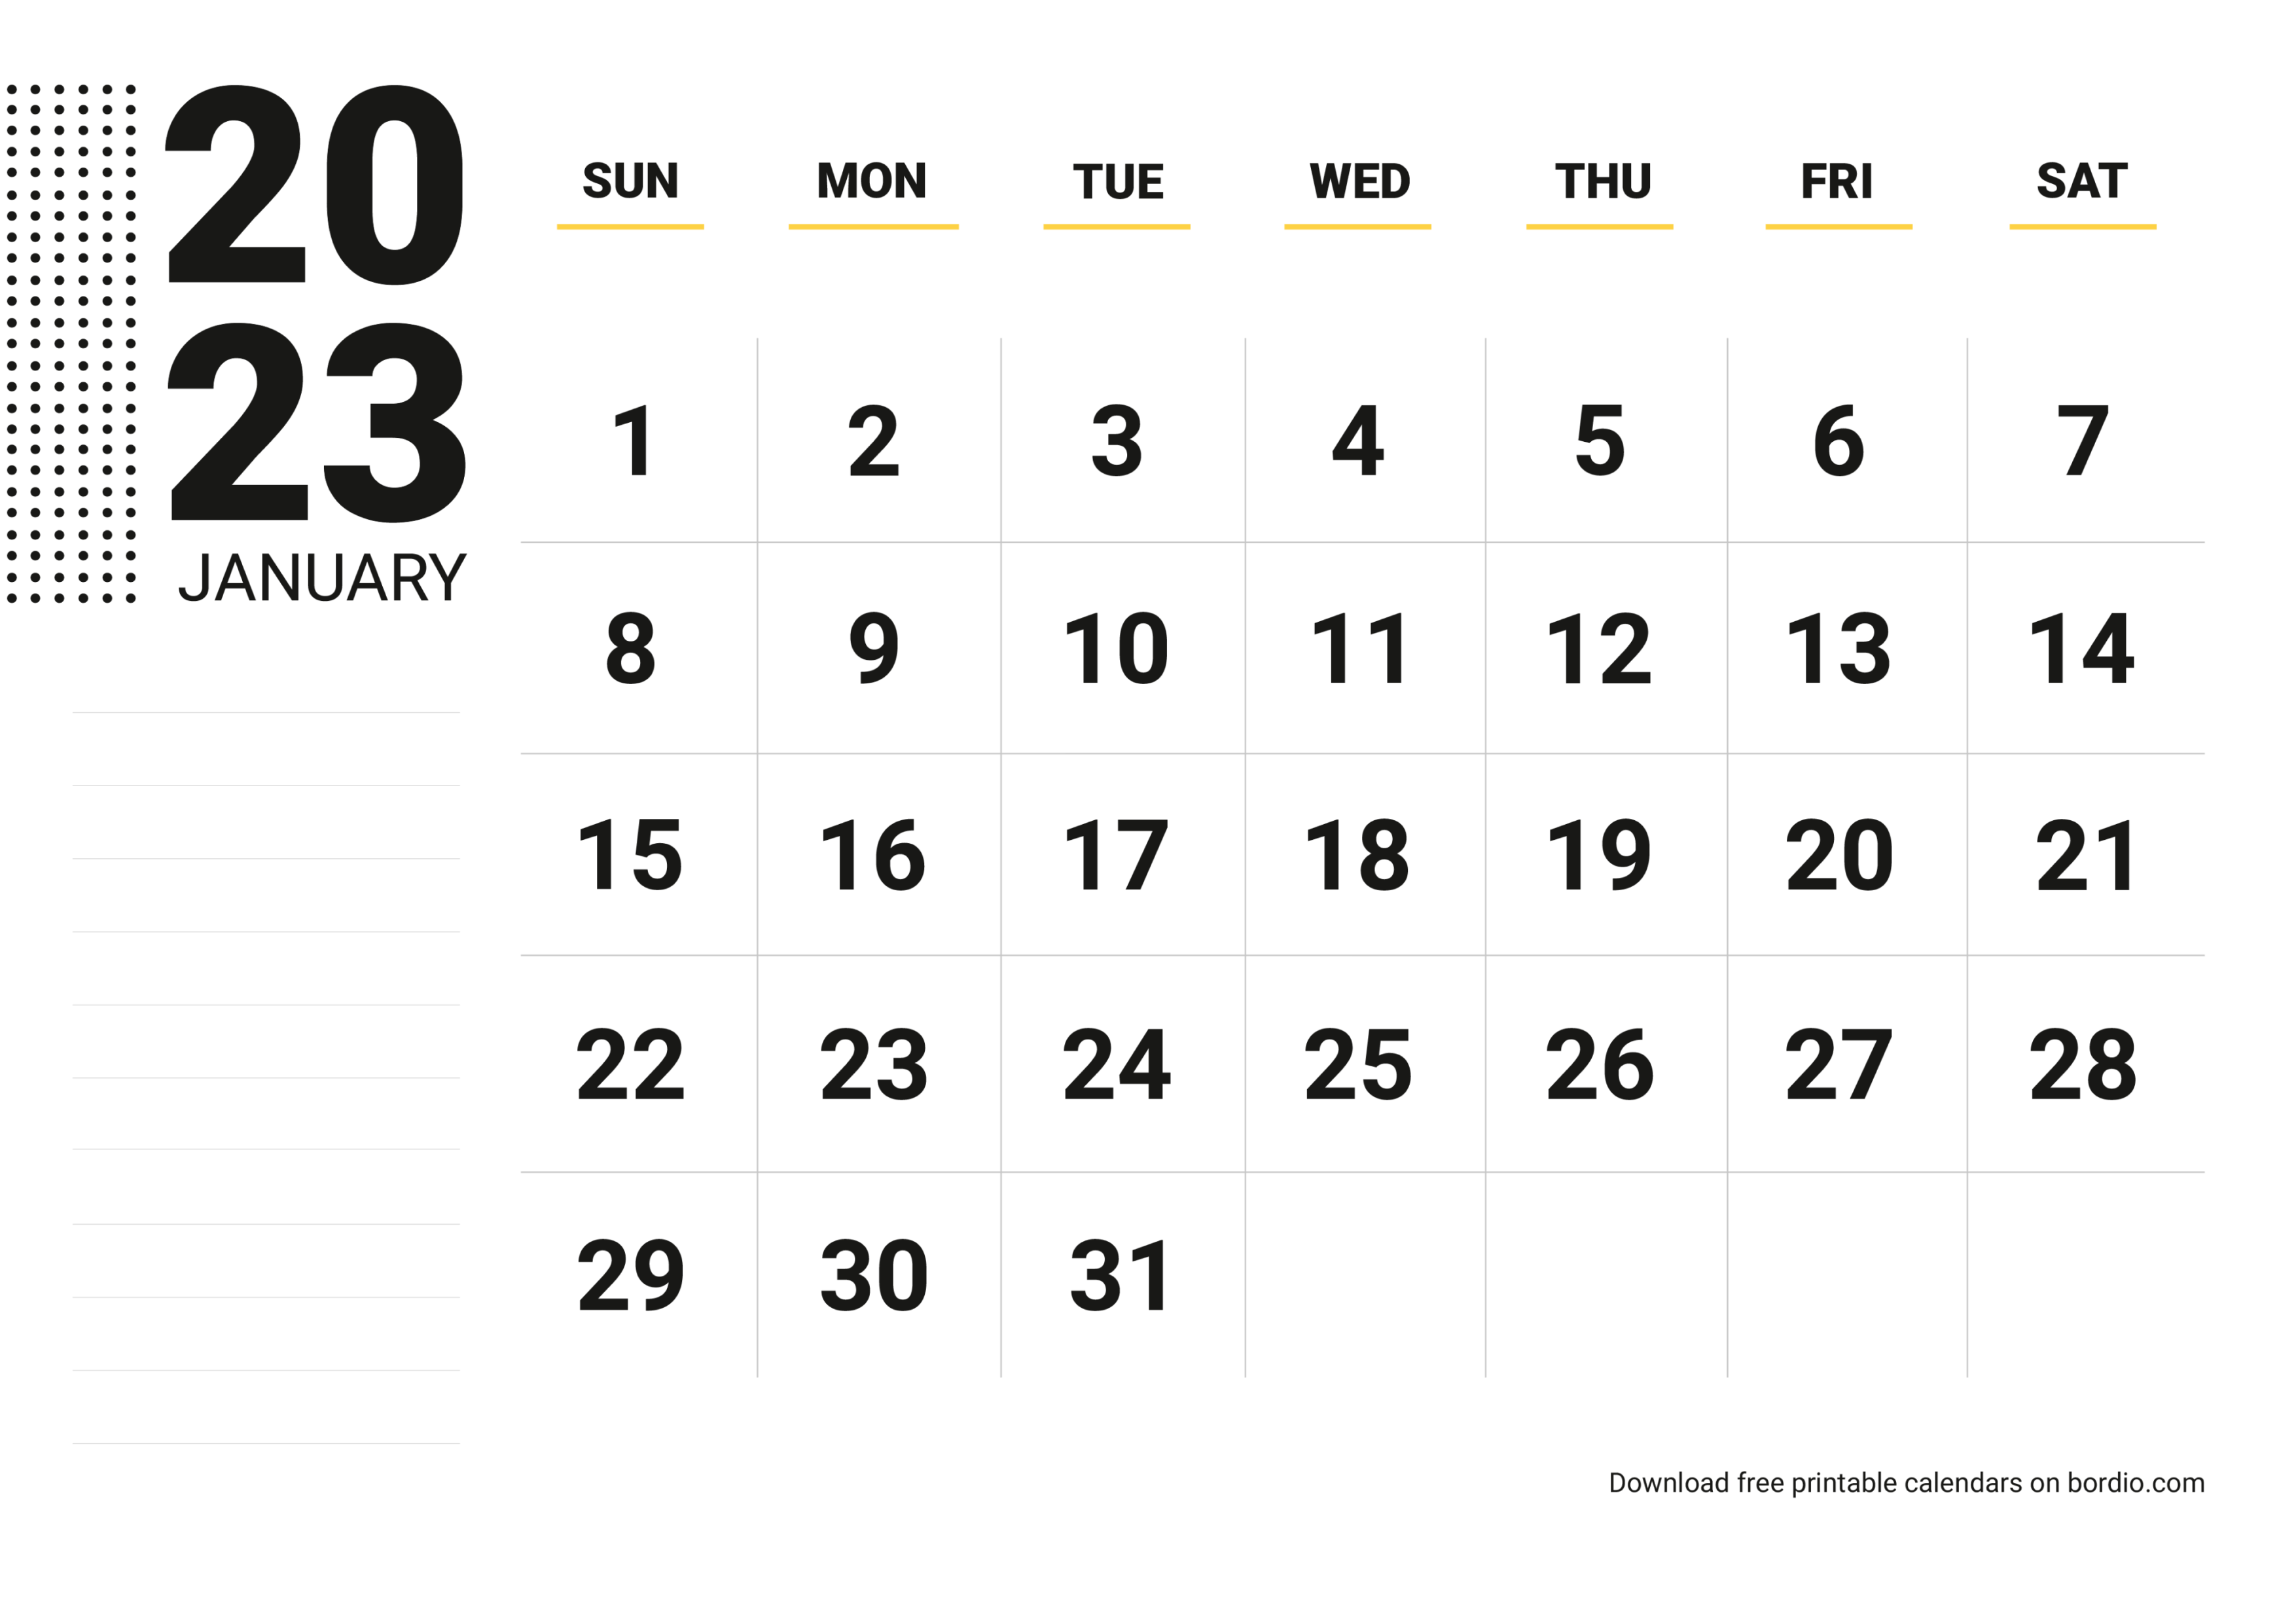 Printable January 2023 Calendar Free Download In Pdf - Bordio